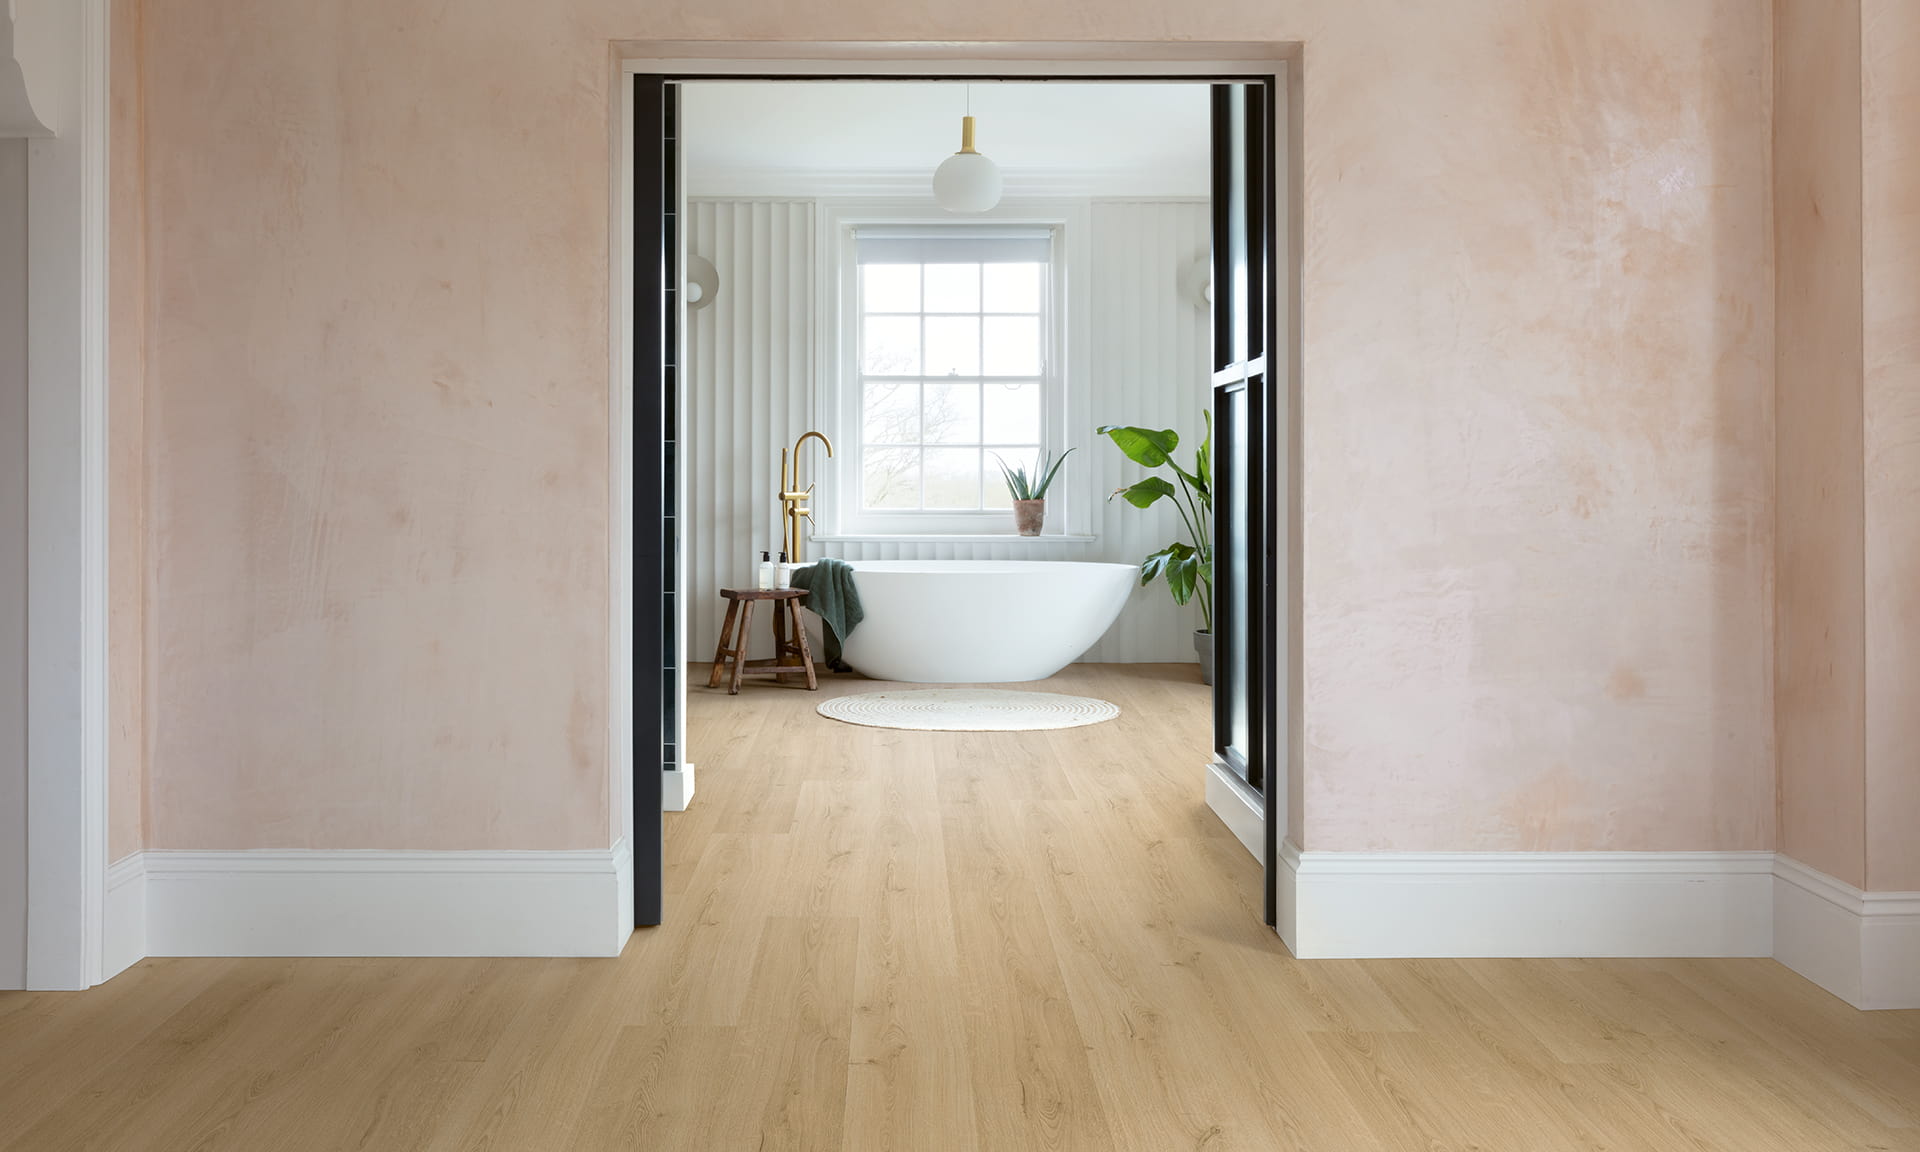 Bathroom with natural vinyl plank flooring